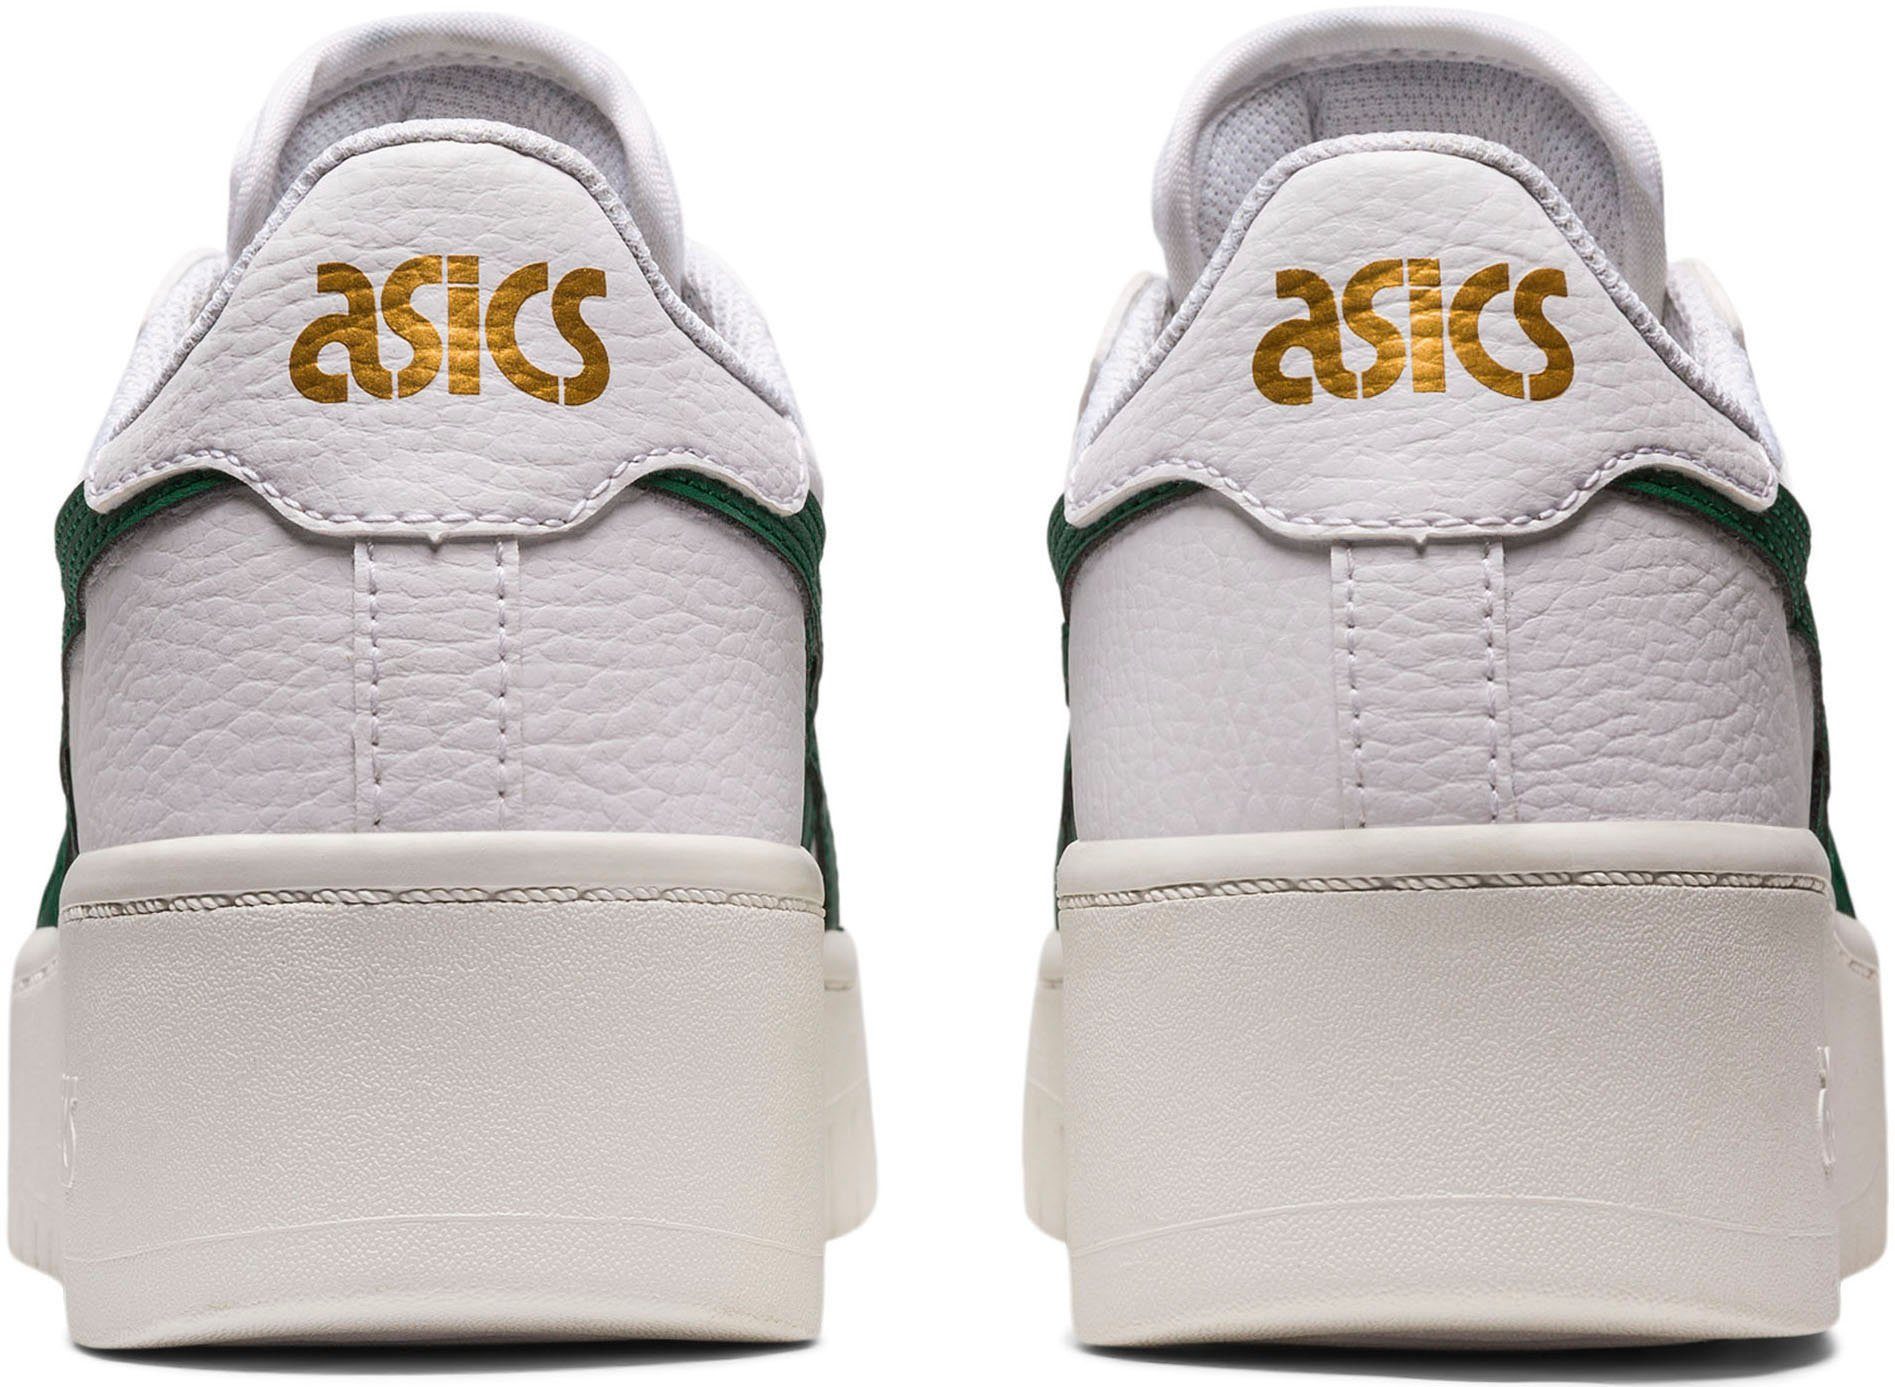 ASICS S Sneaker SportStyle PF weiß-grün JAPAN